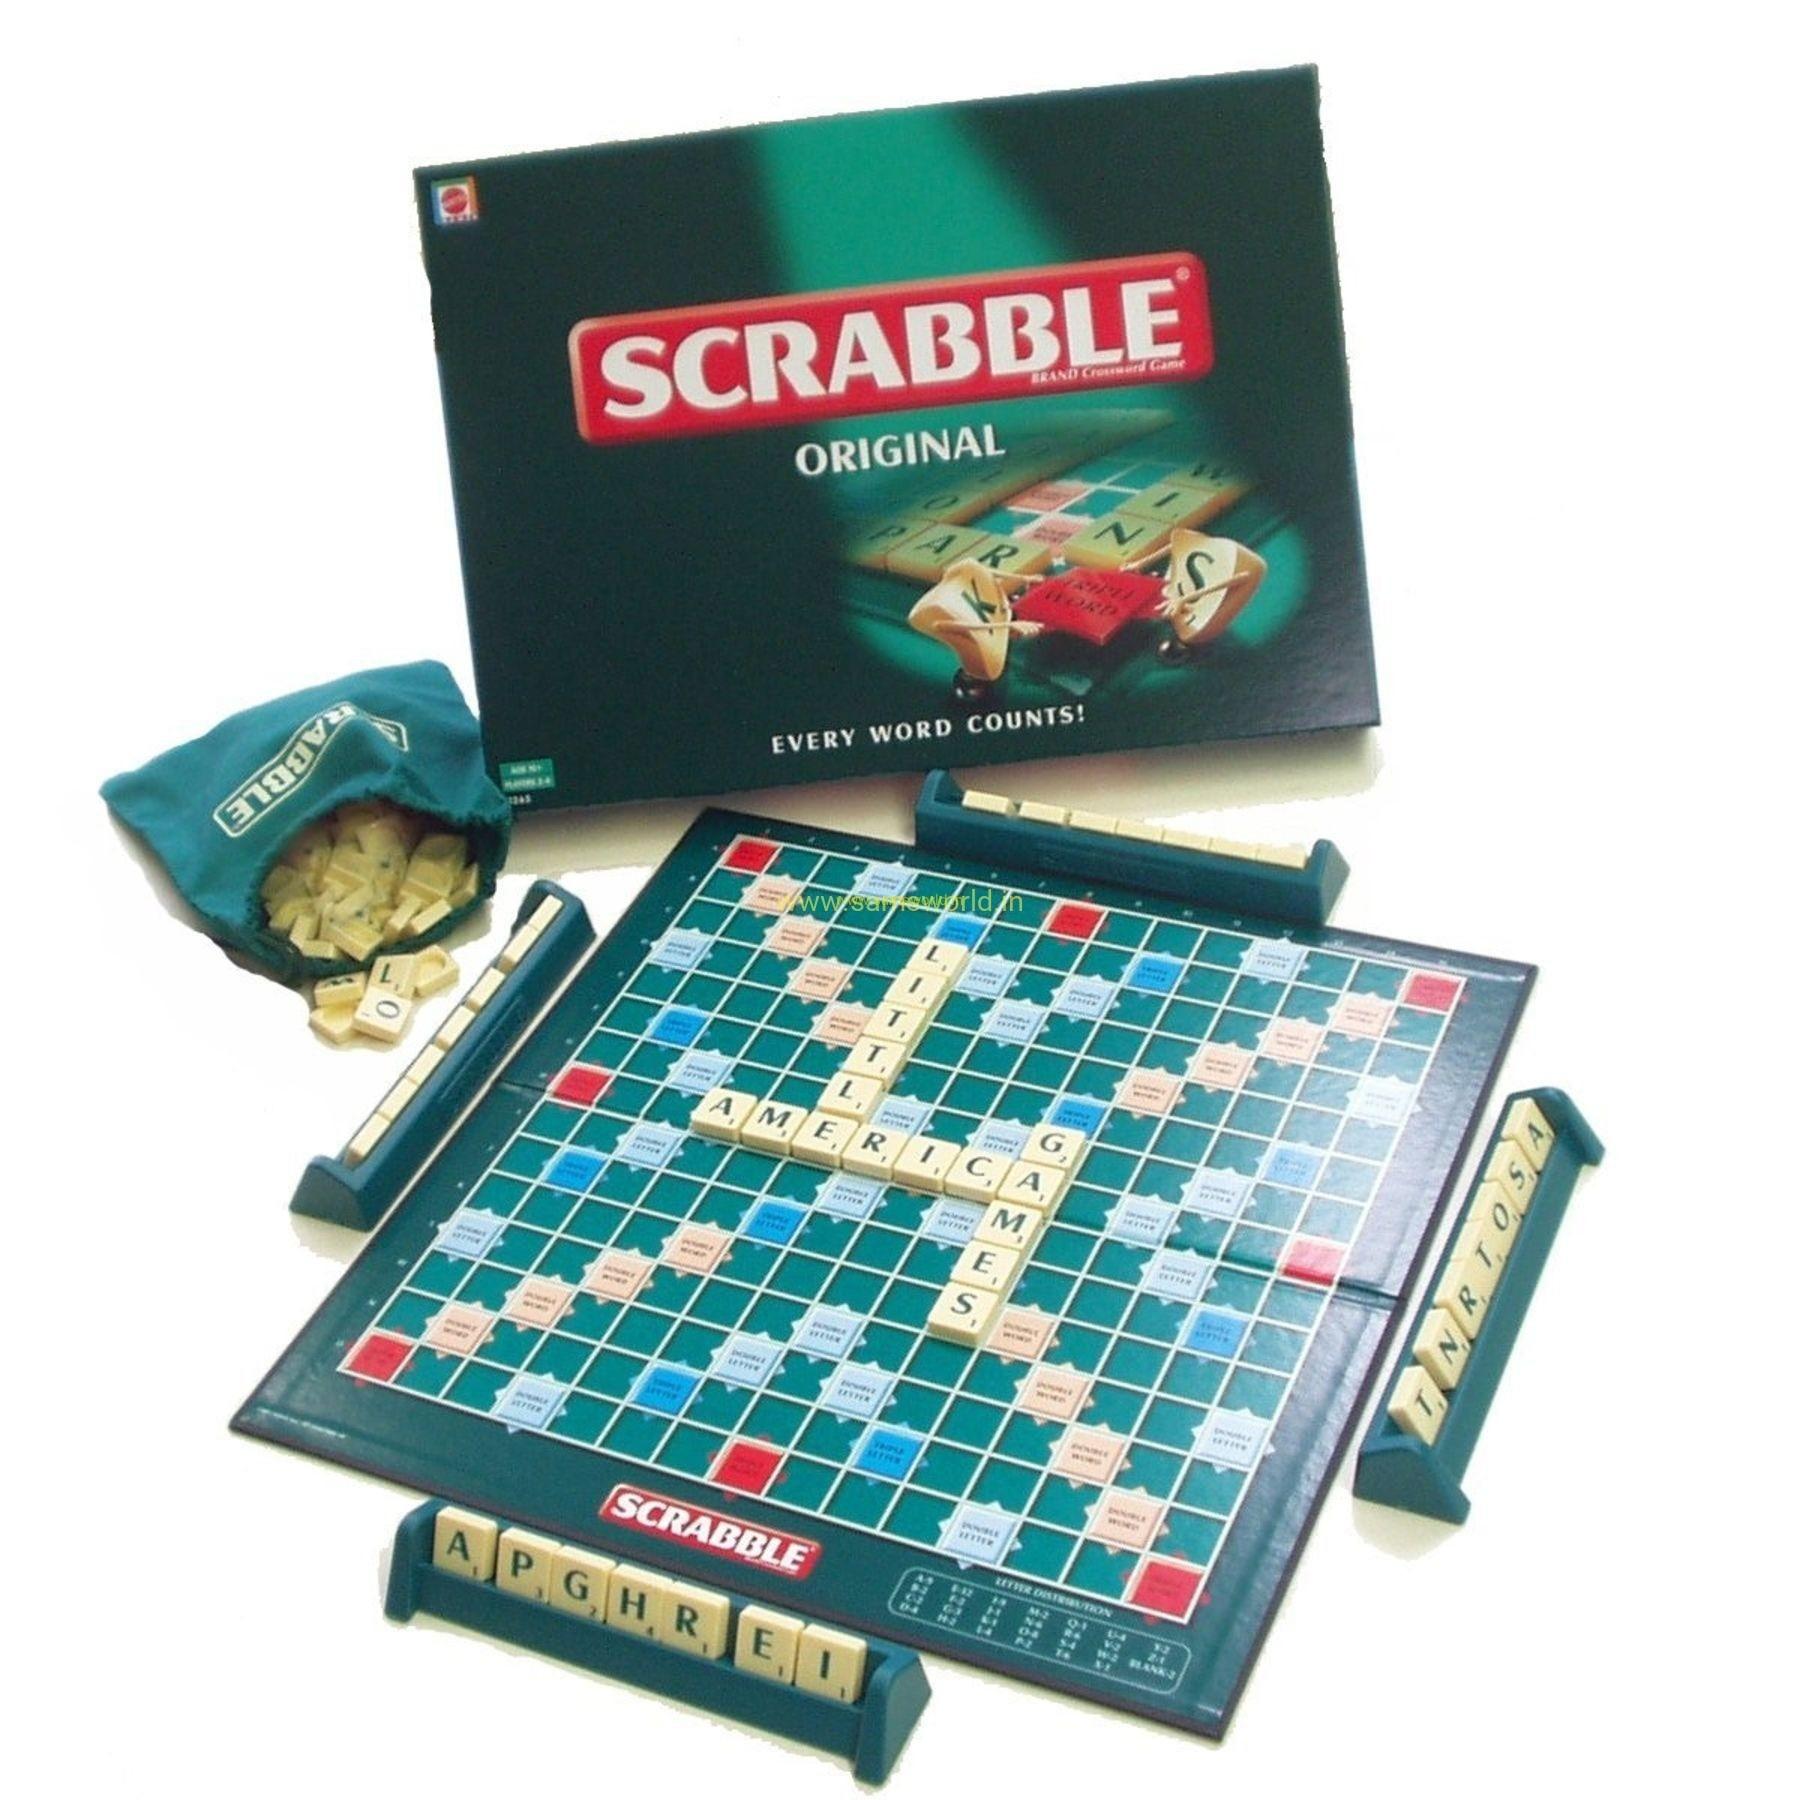 Monopoly + Scrabble + Twister - jocuri de societate